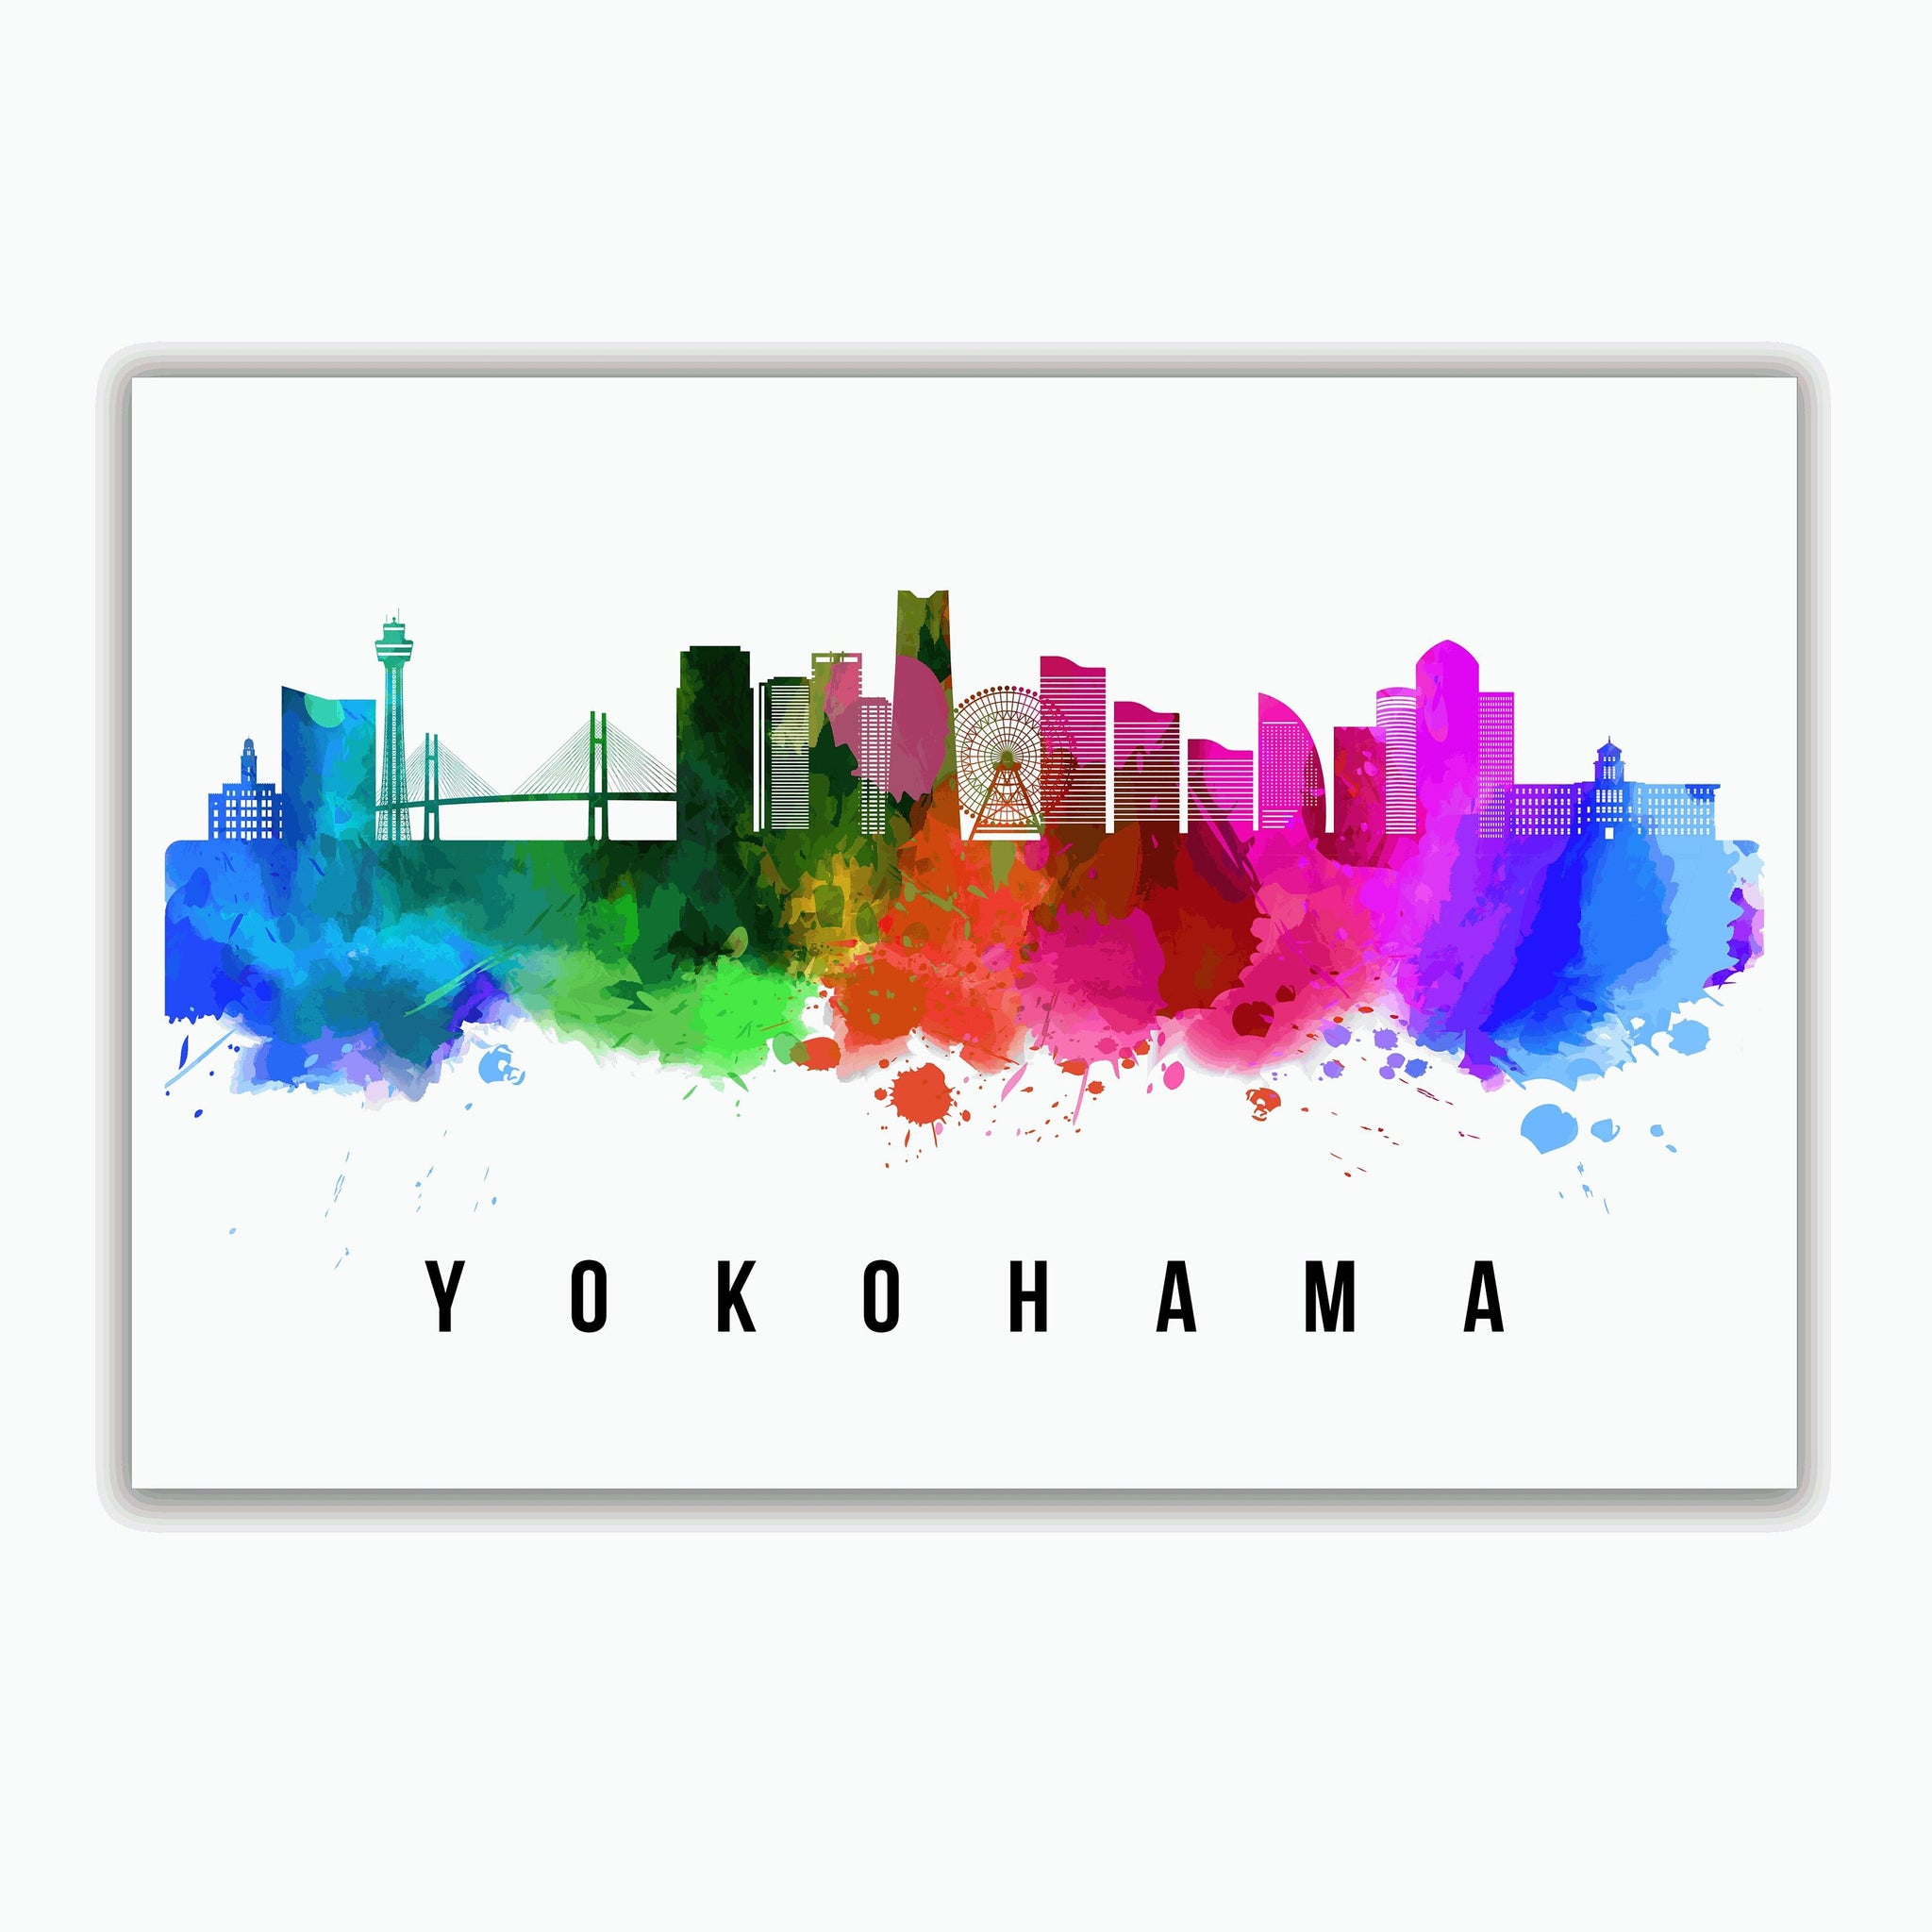 YOKOHAMA - JAPAN Poster,  Skyline Poster Cityscape and Landmark Yokohama Illustration Home Wall Art, Office Decor